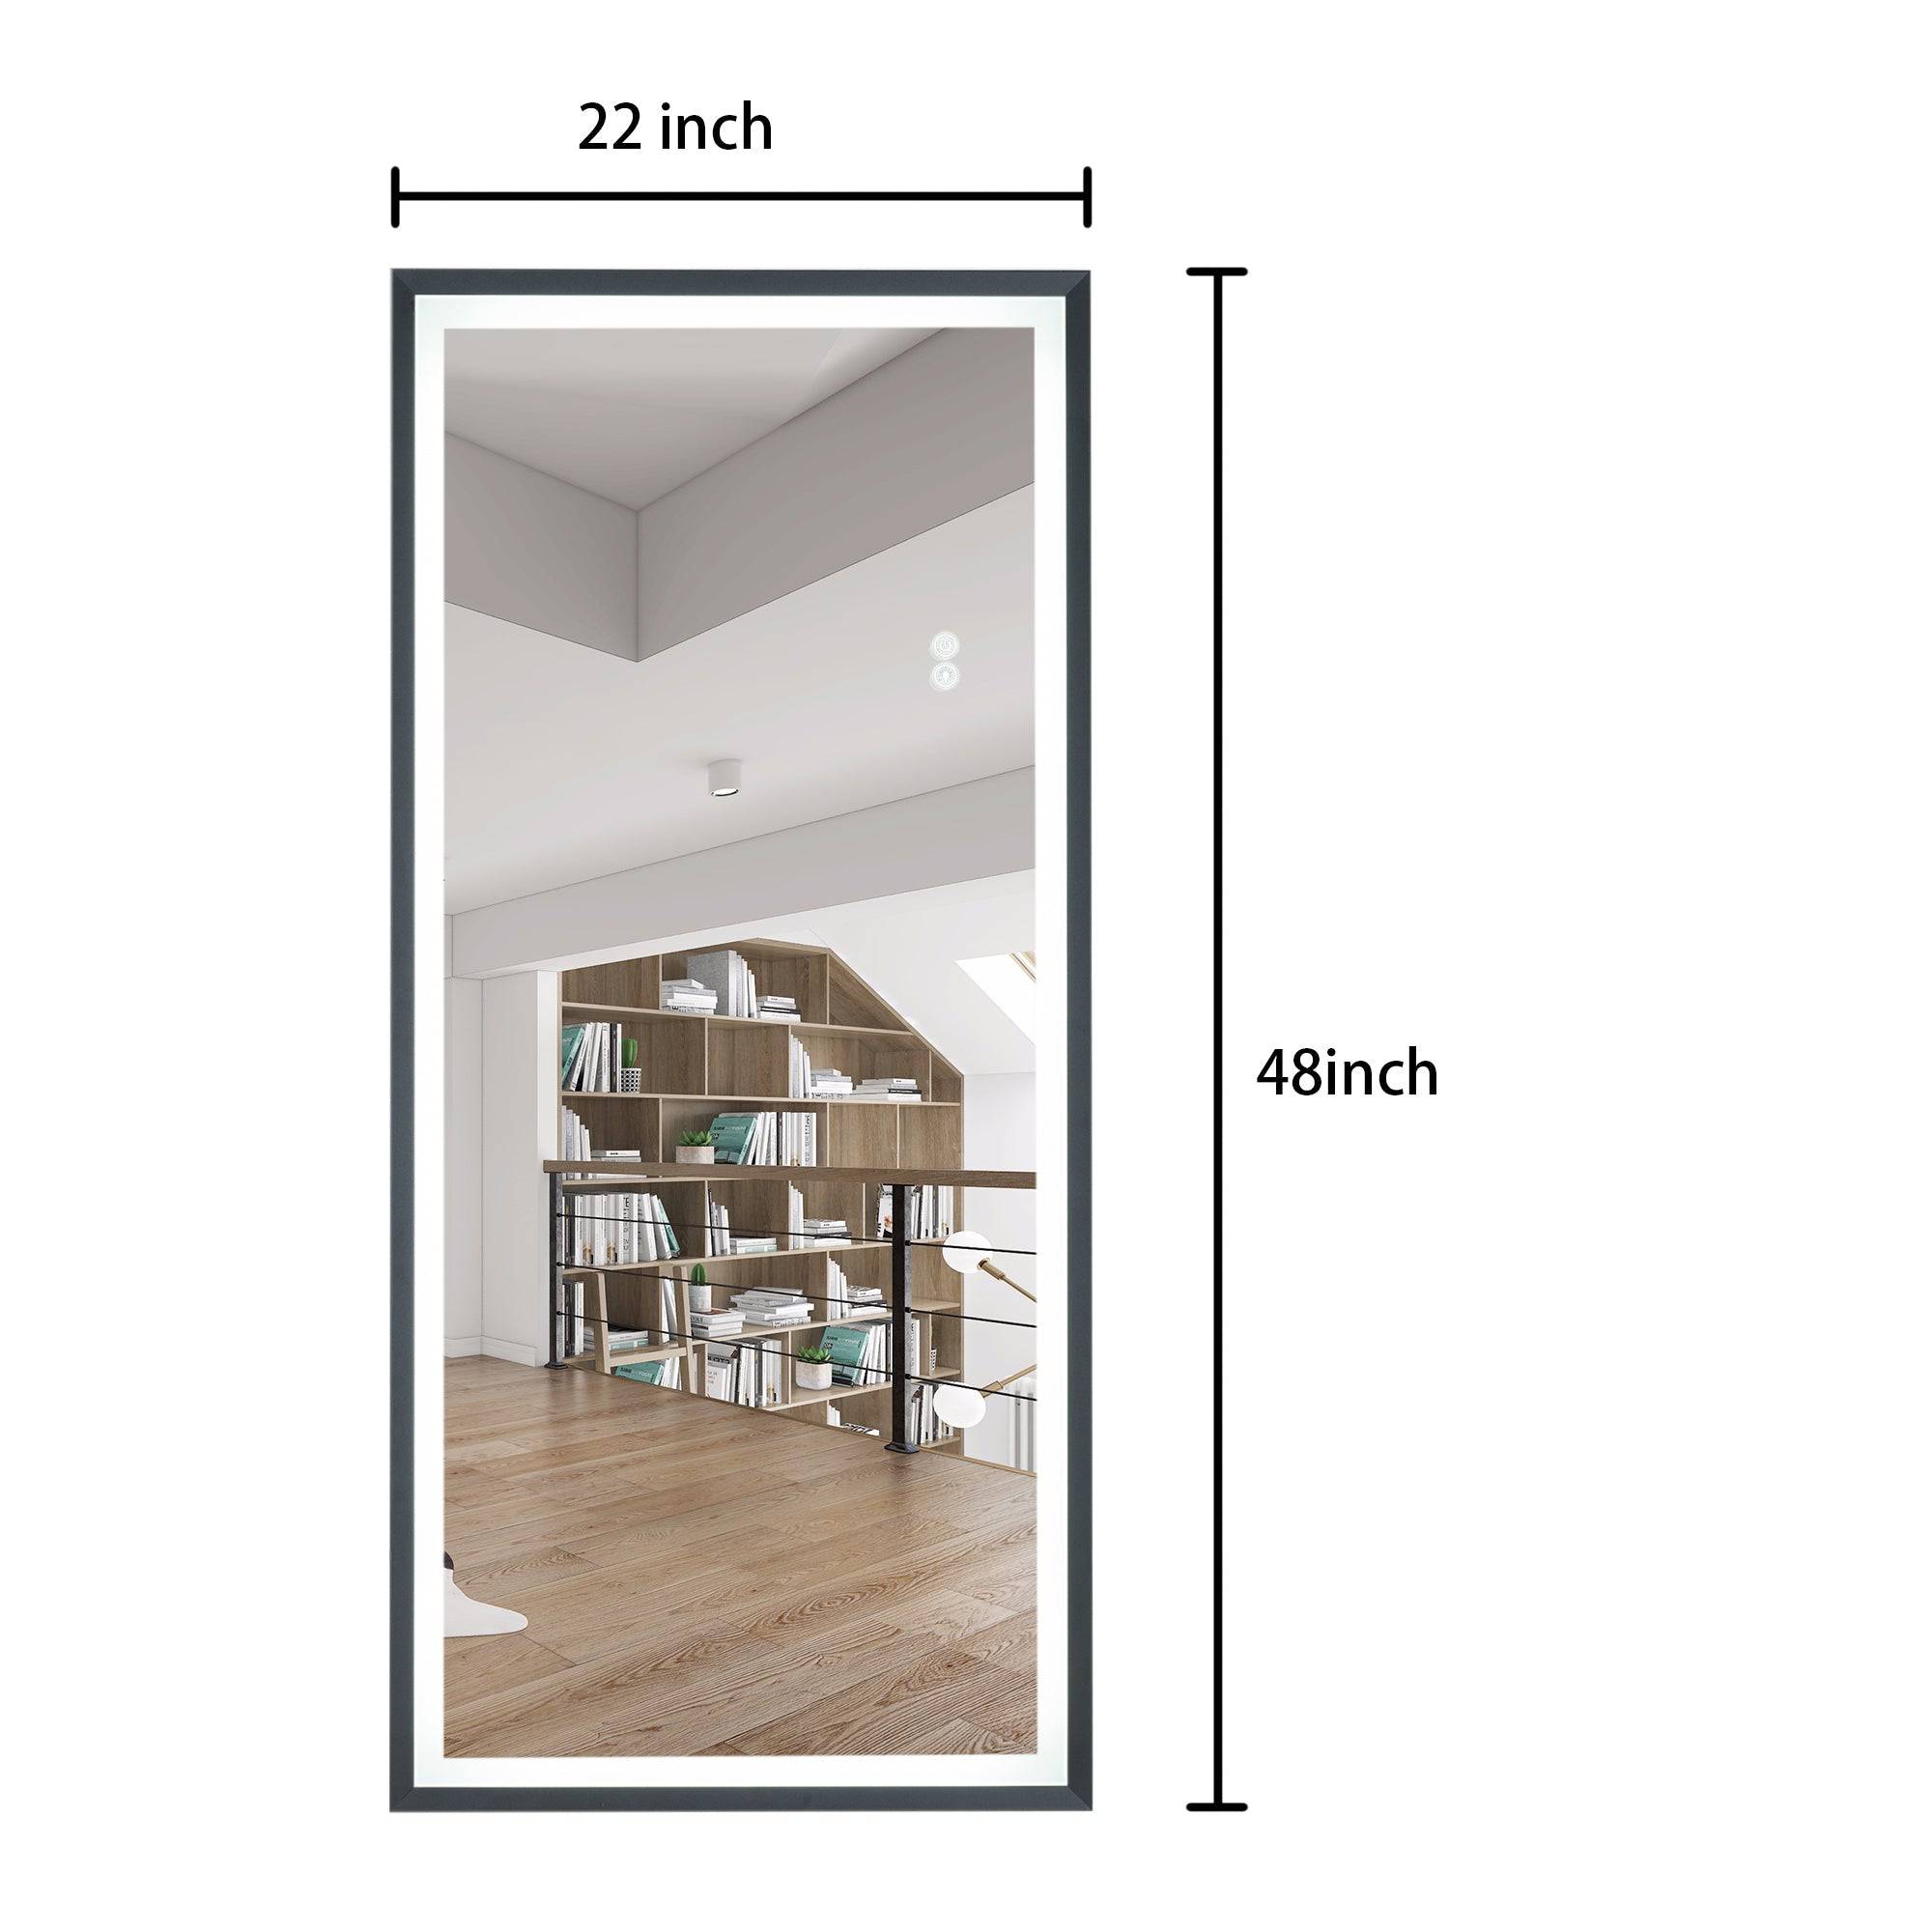 48x22 Inch Full Length Entry Door Wall Lighted Mirror - Venetio